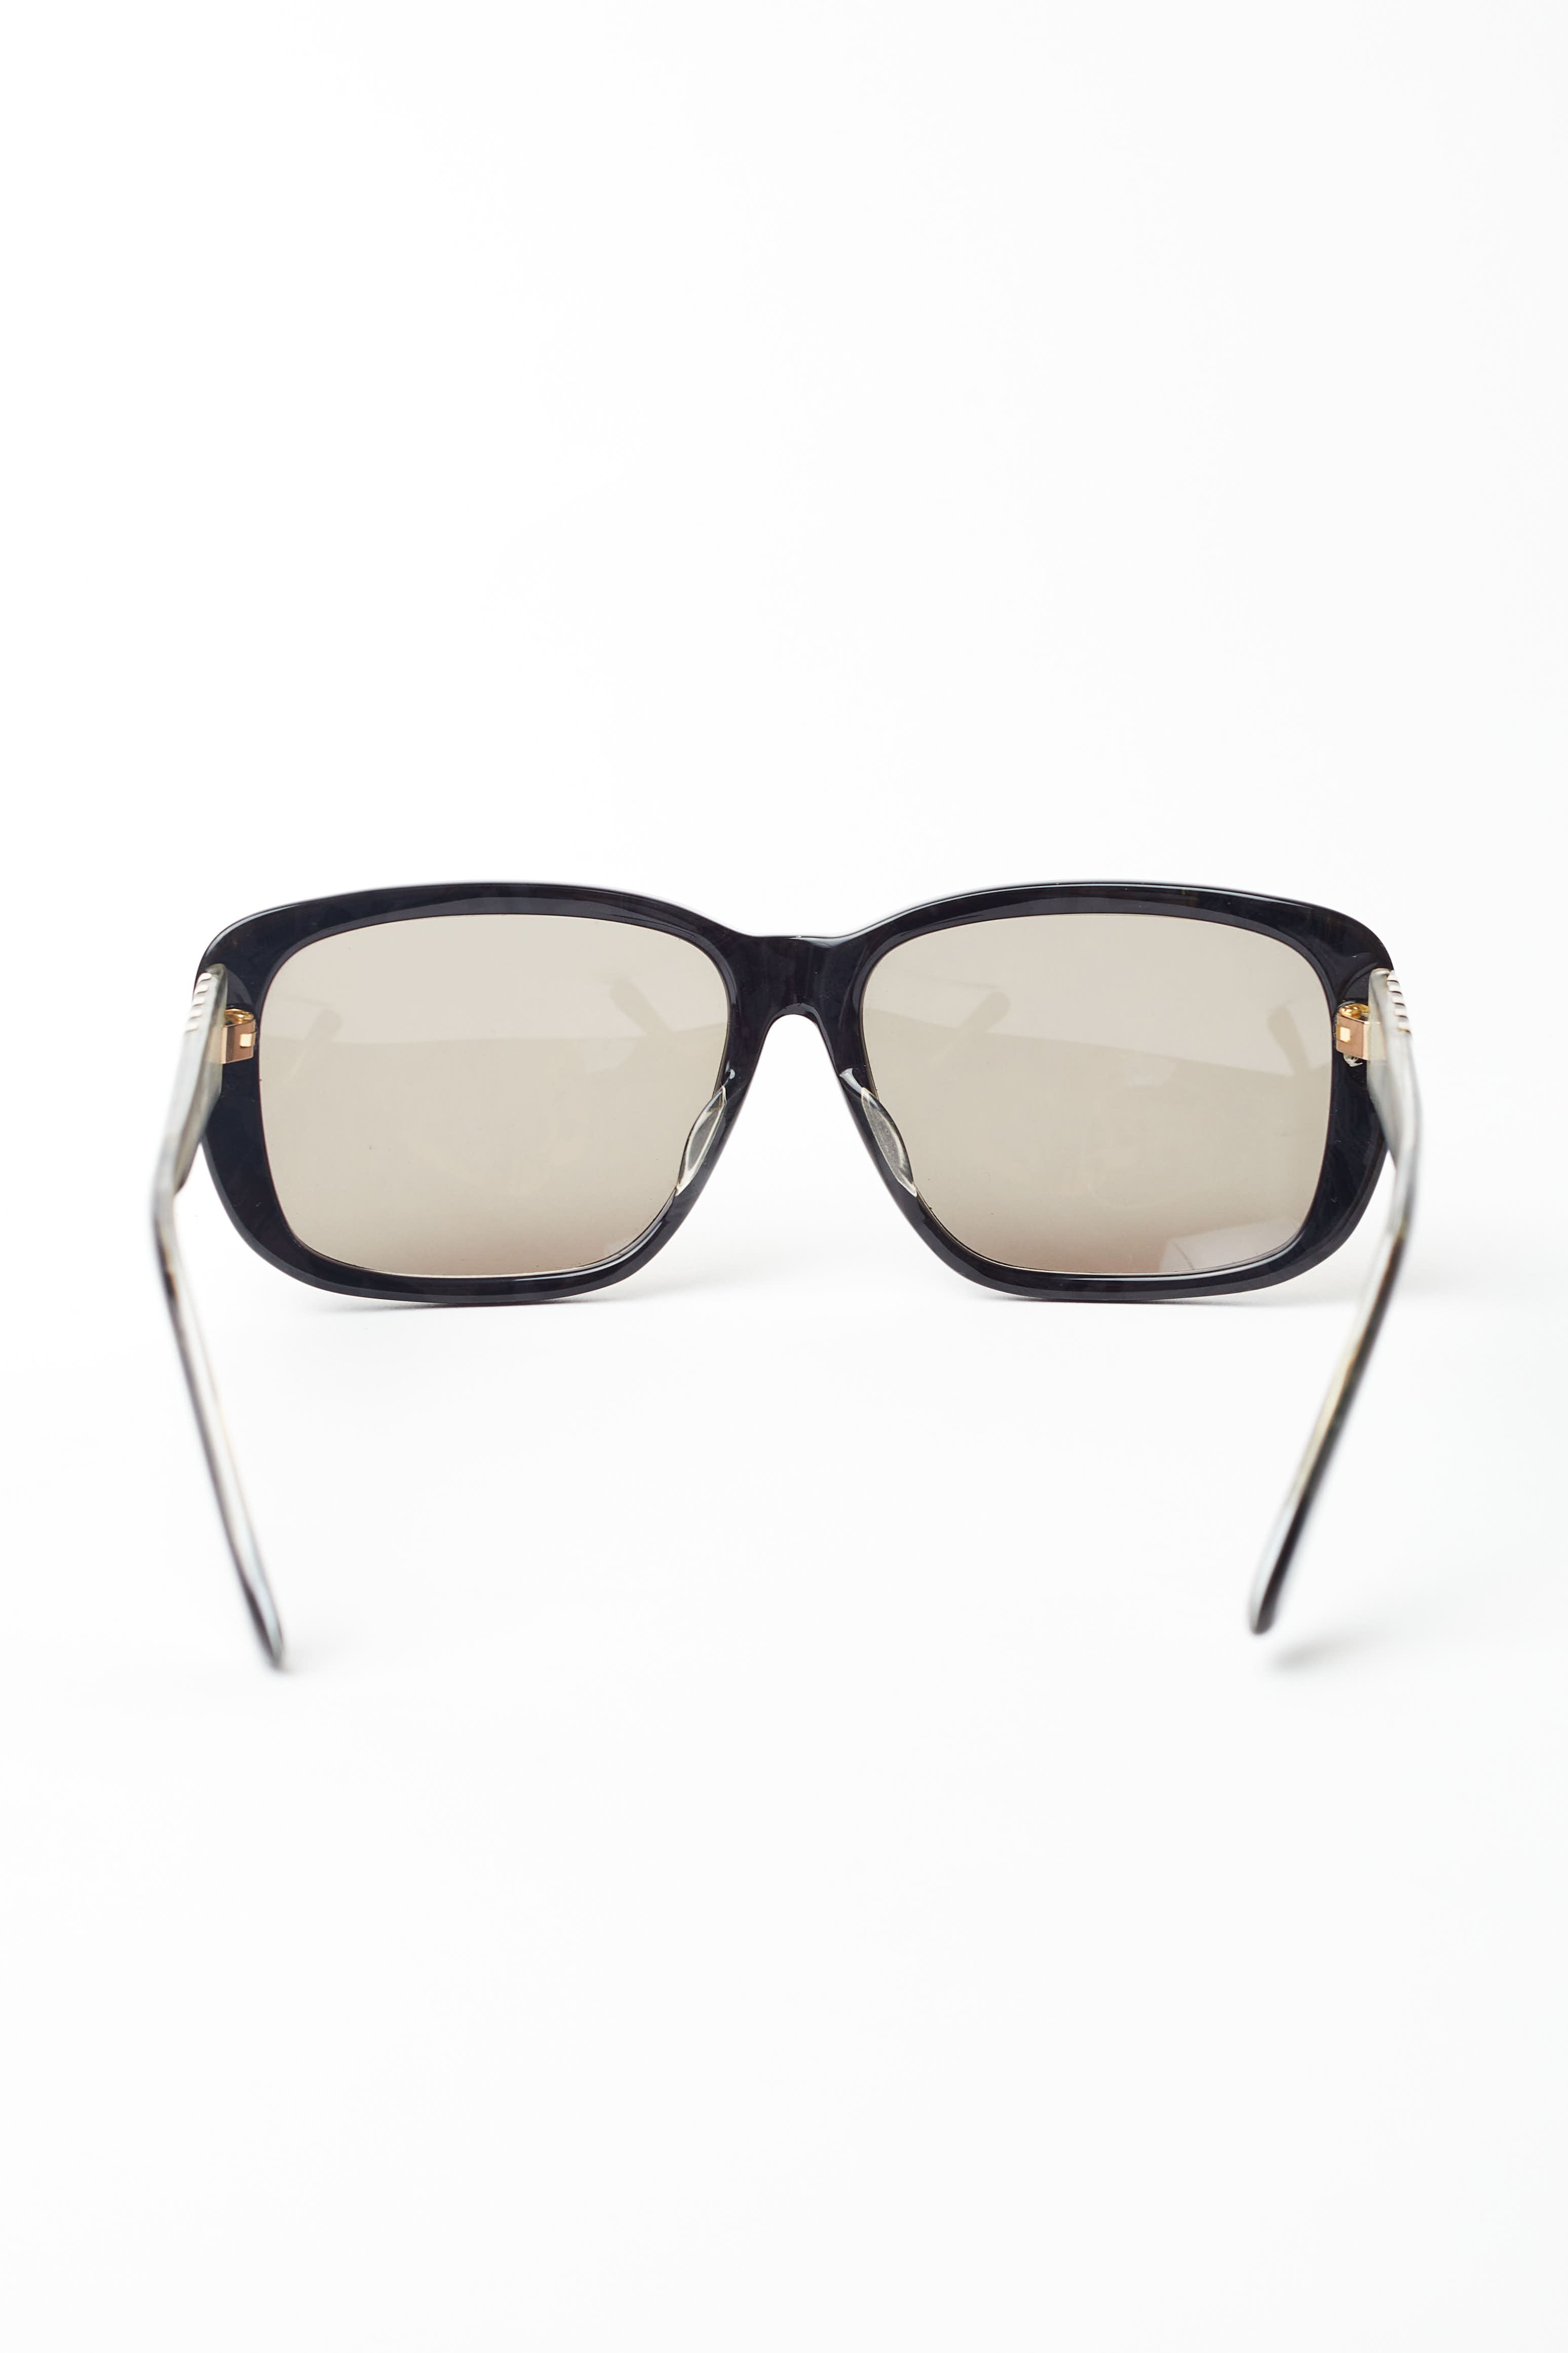 Claude Montana <br> Deadstock 80's Alain Mikli rectangular frame sunglasses